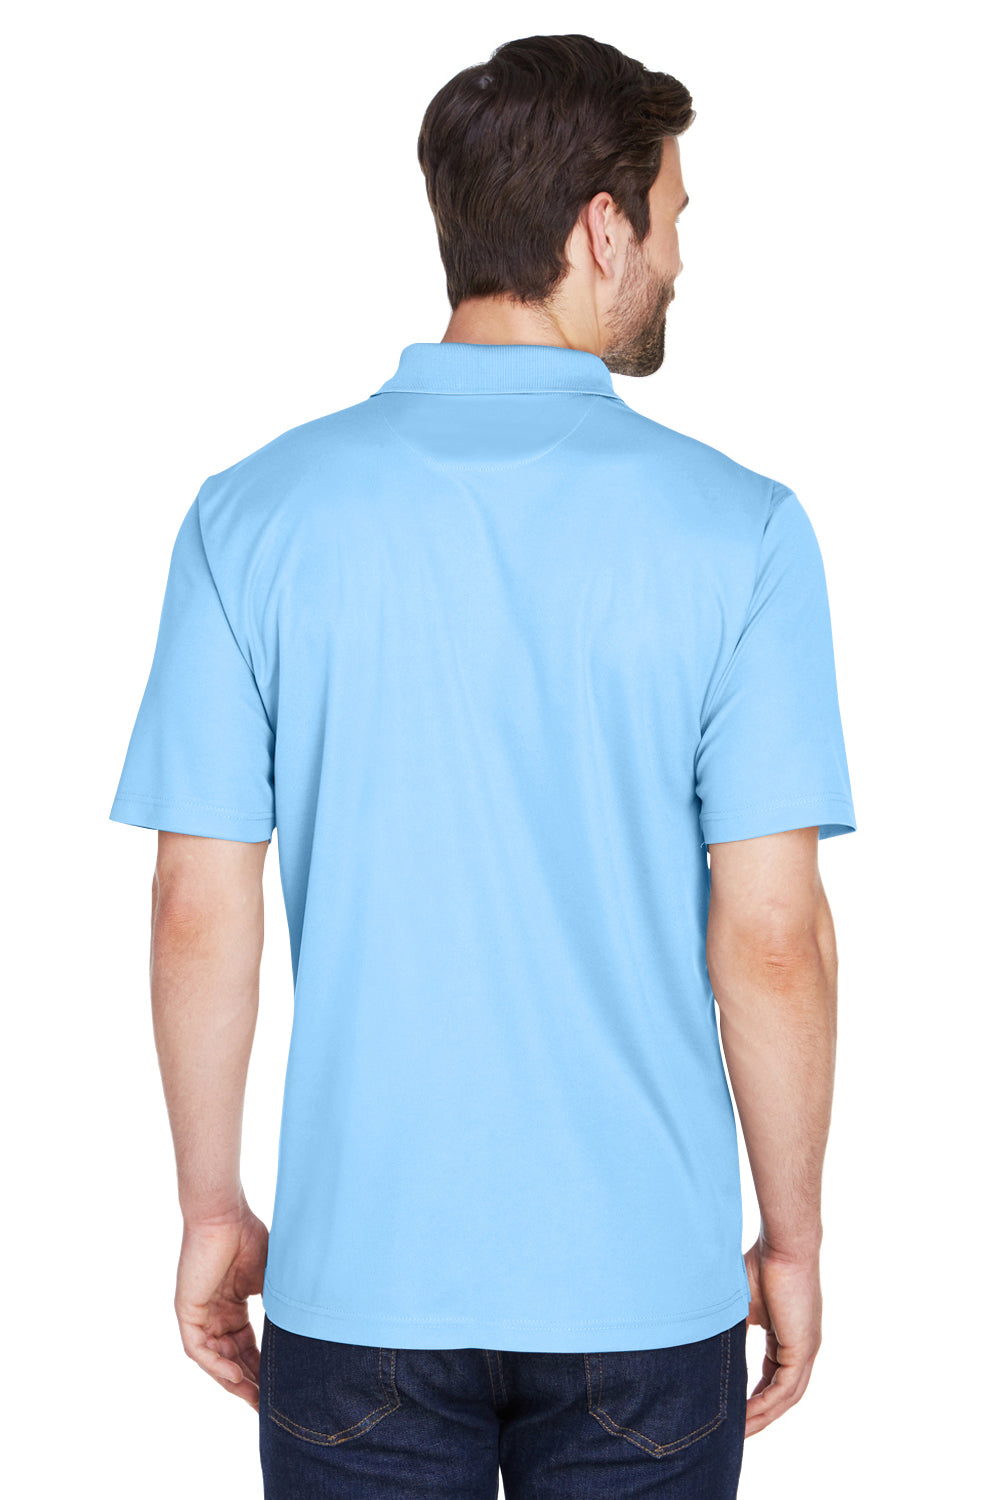 UltraClub 8210 Mens Cool & Dry Moisture Wicking Short Sleeve Polo Shirt Columbia Blue Back